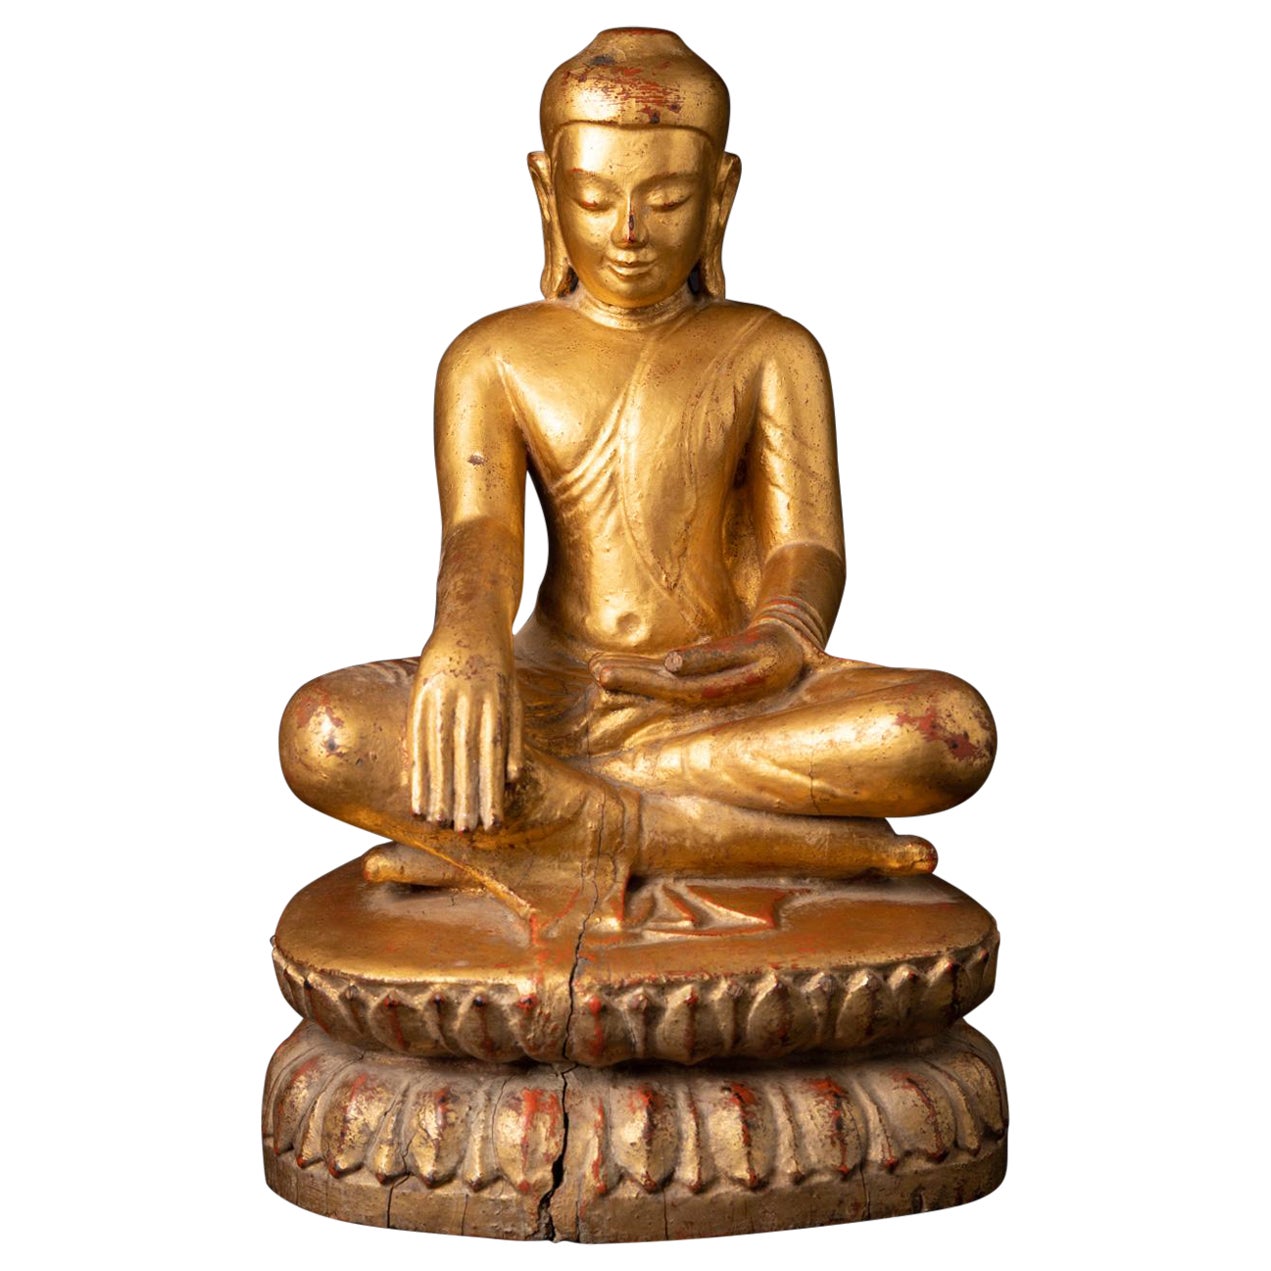 17th century special antique wooden Burmese Buddha statue in Bhumisparsha Mudra